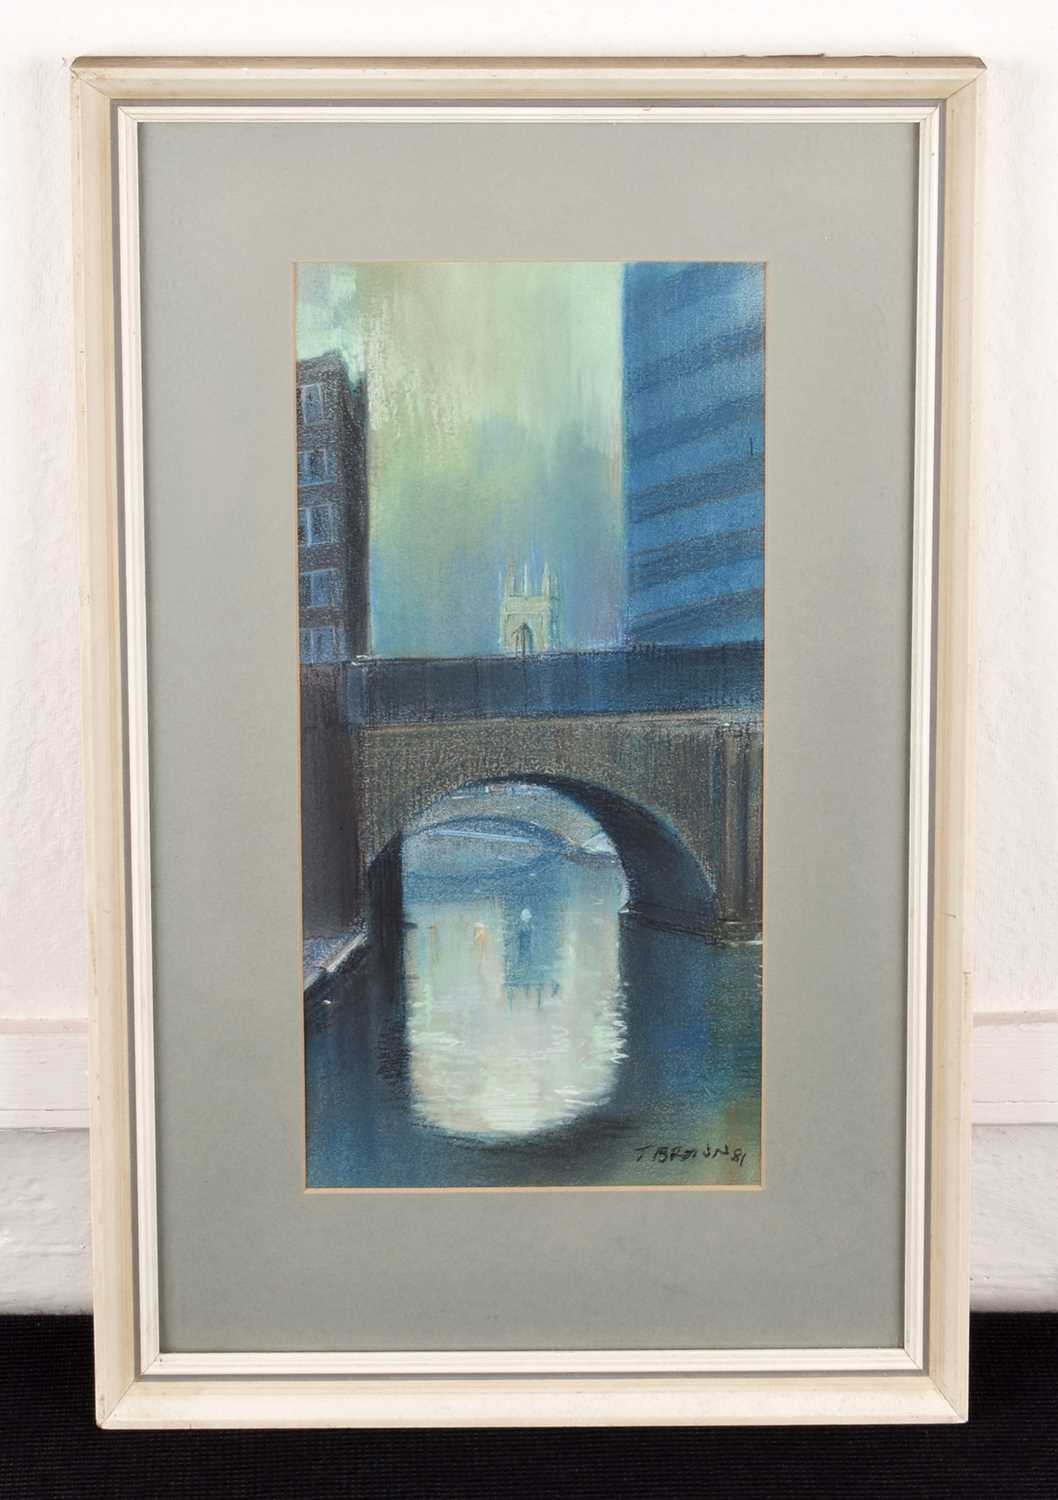 Tom Brown (British 1933-2017) "Blackfriars Bridge" - Image 2 of 2